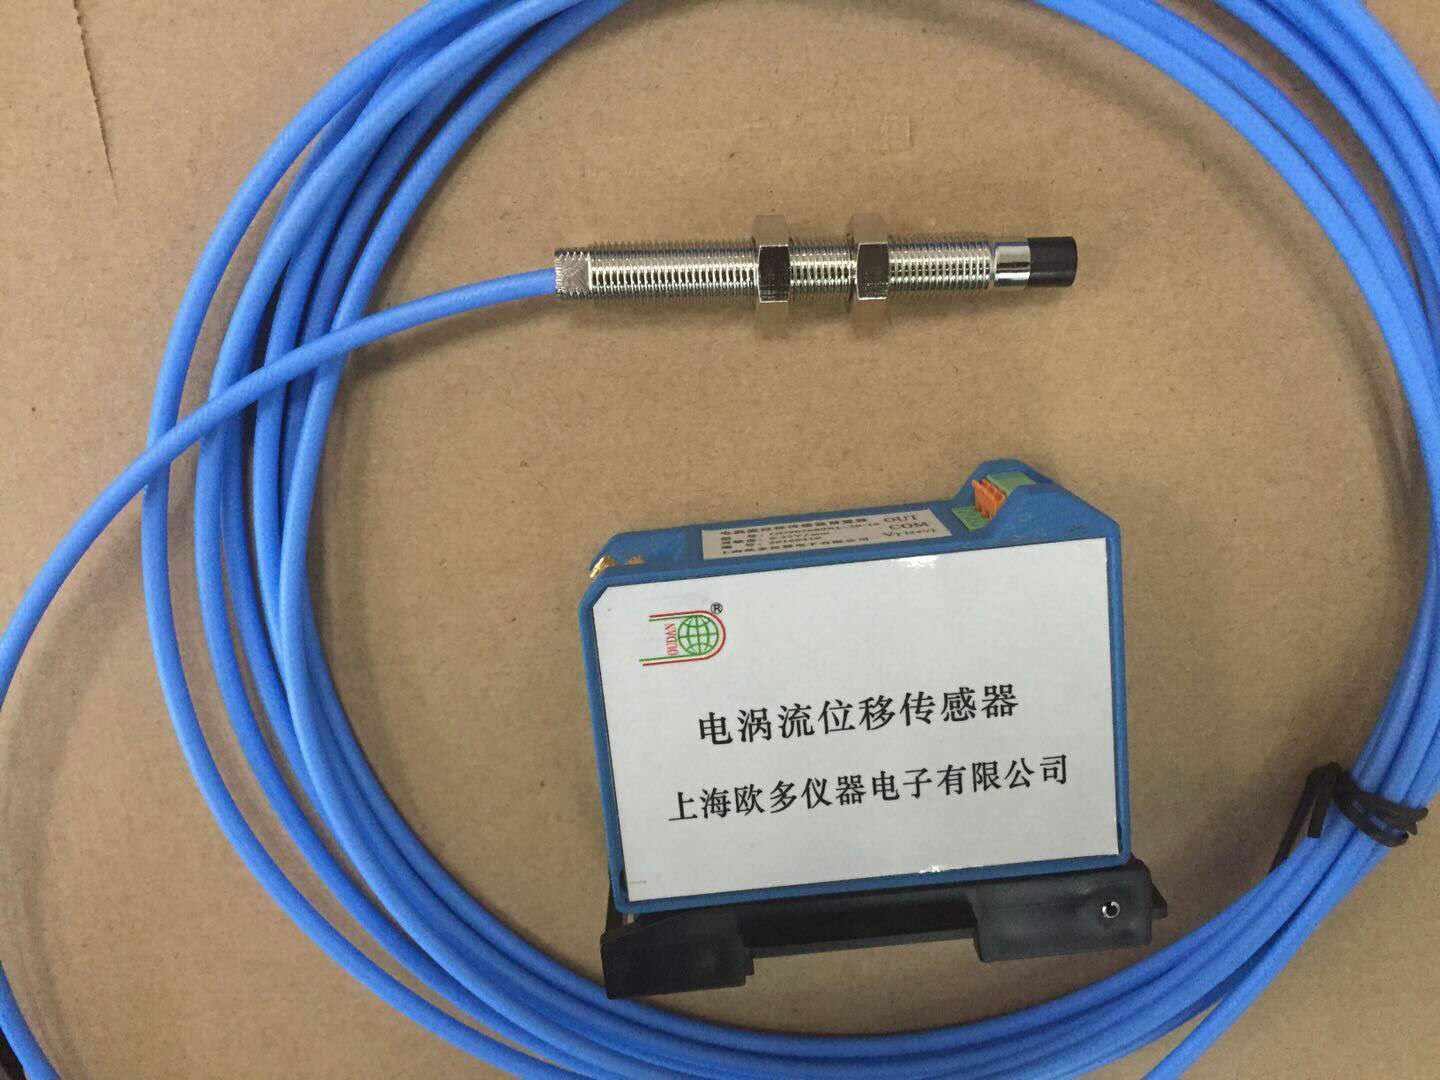 OD9000系列电涡流传感器OD900800XL上海欧多厂家直销 电涡流传感器,传感器,位移传感器,振动传感器,一体化电涡流传感器